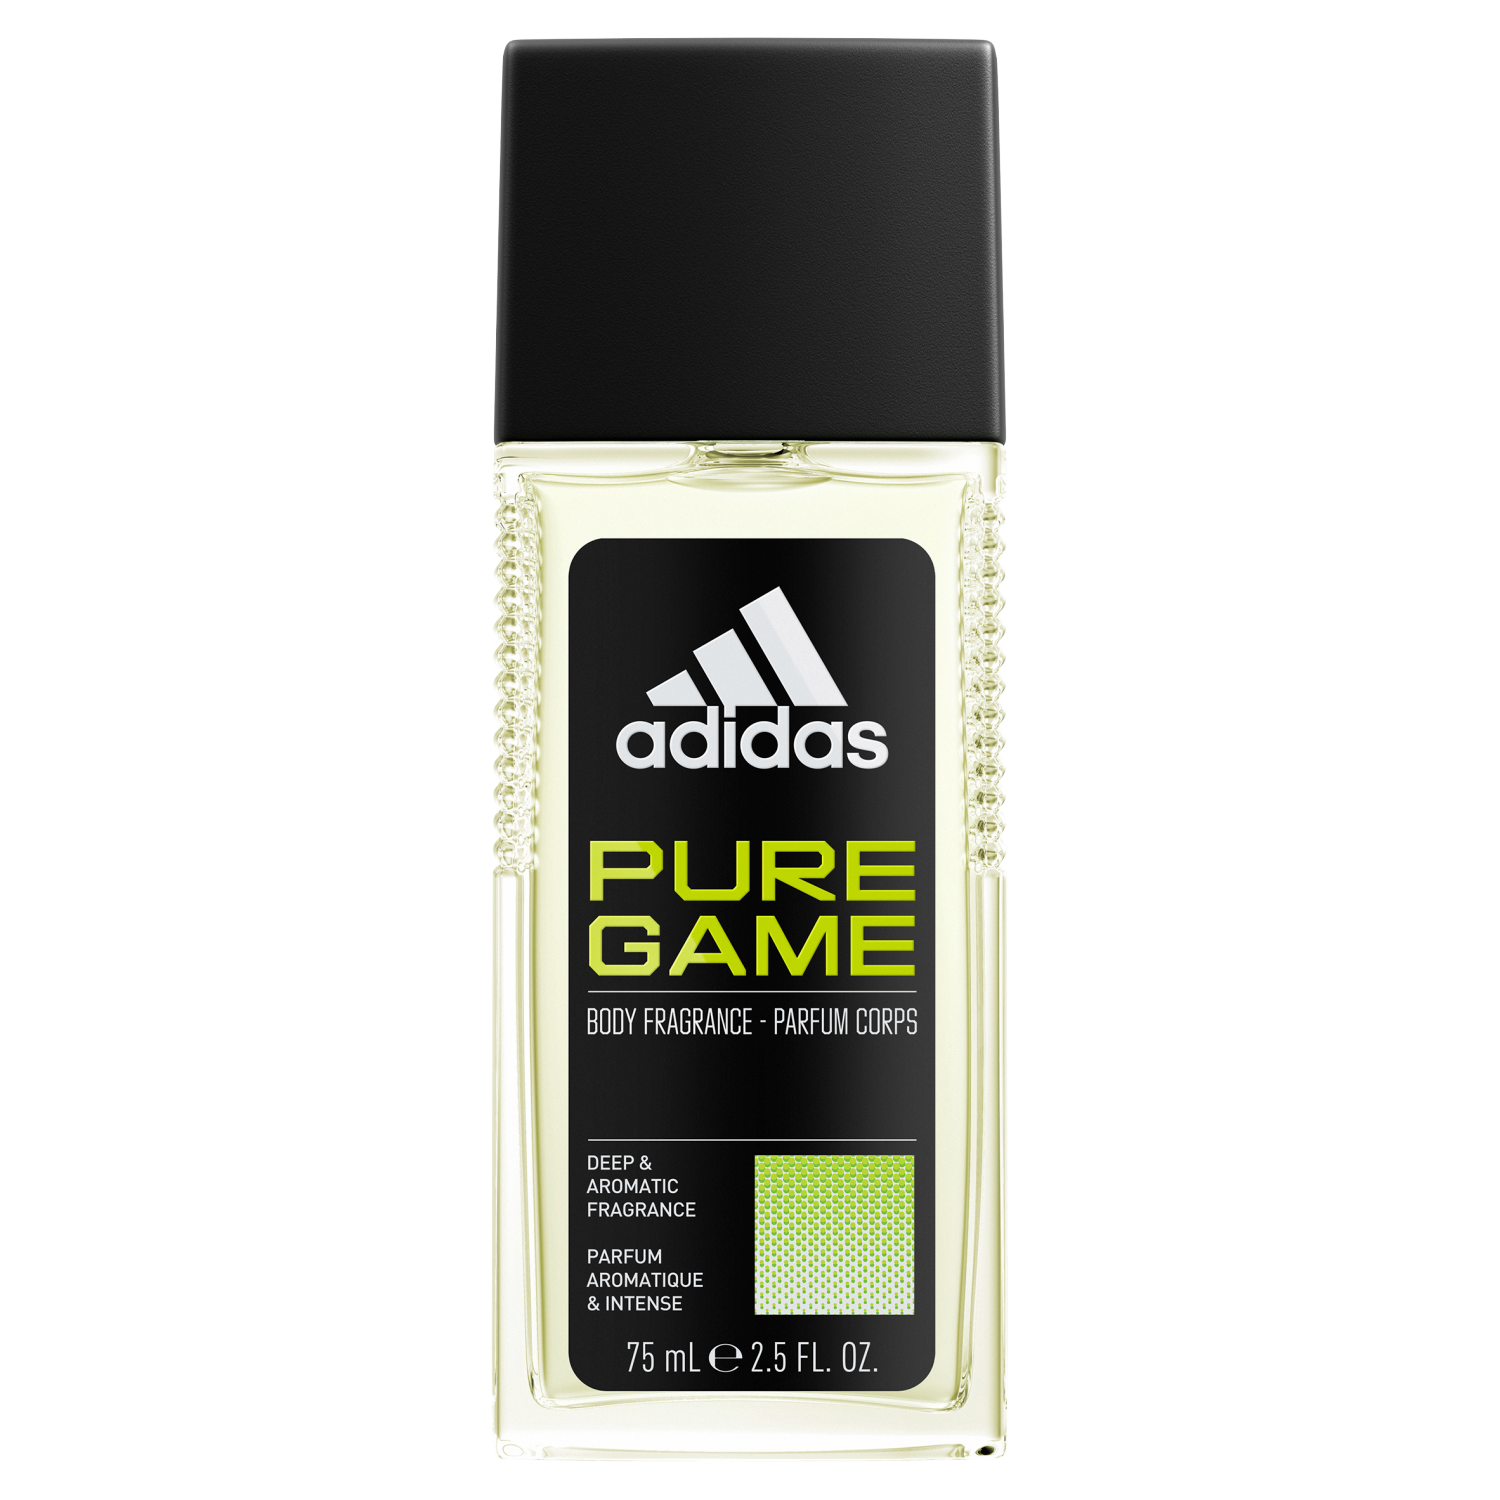 Adidas Pure Game ароматизированный дезодорант для тела для мужчин, 75 мл